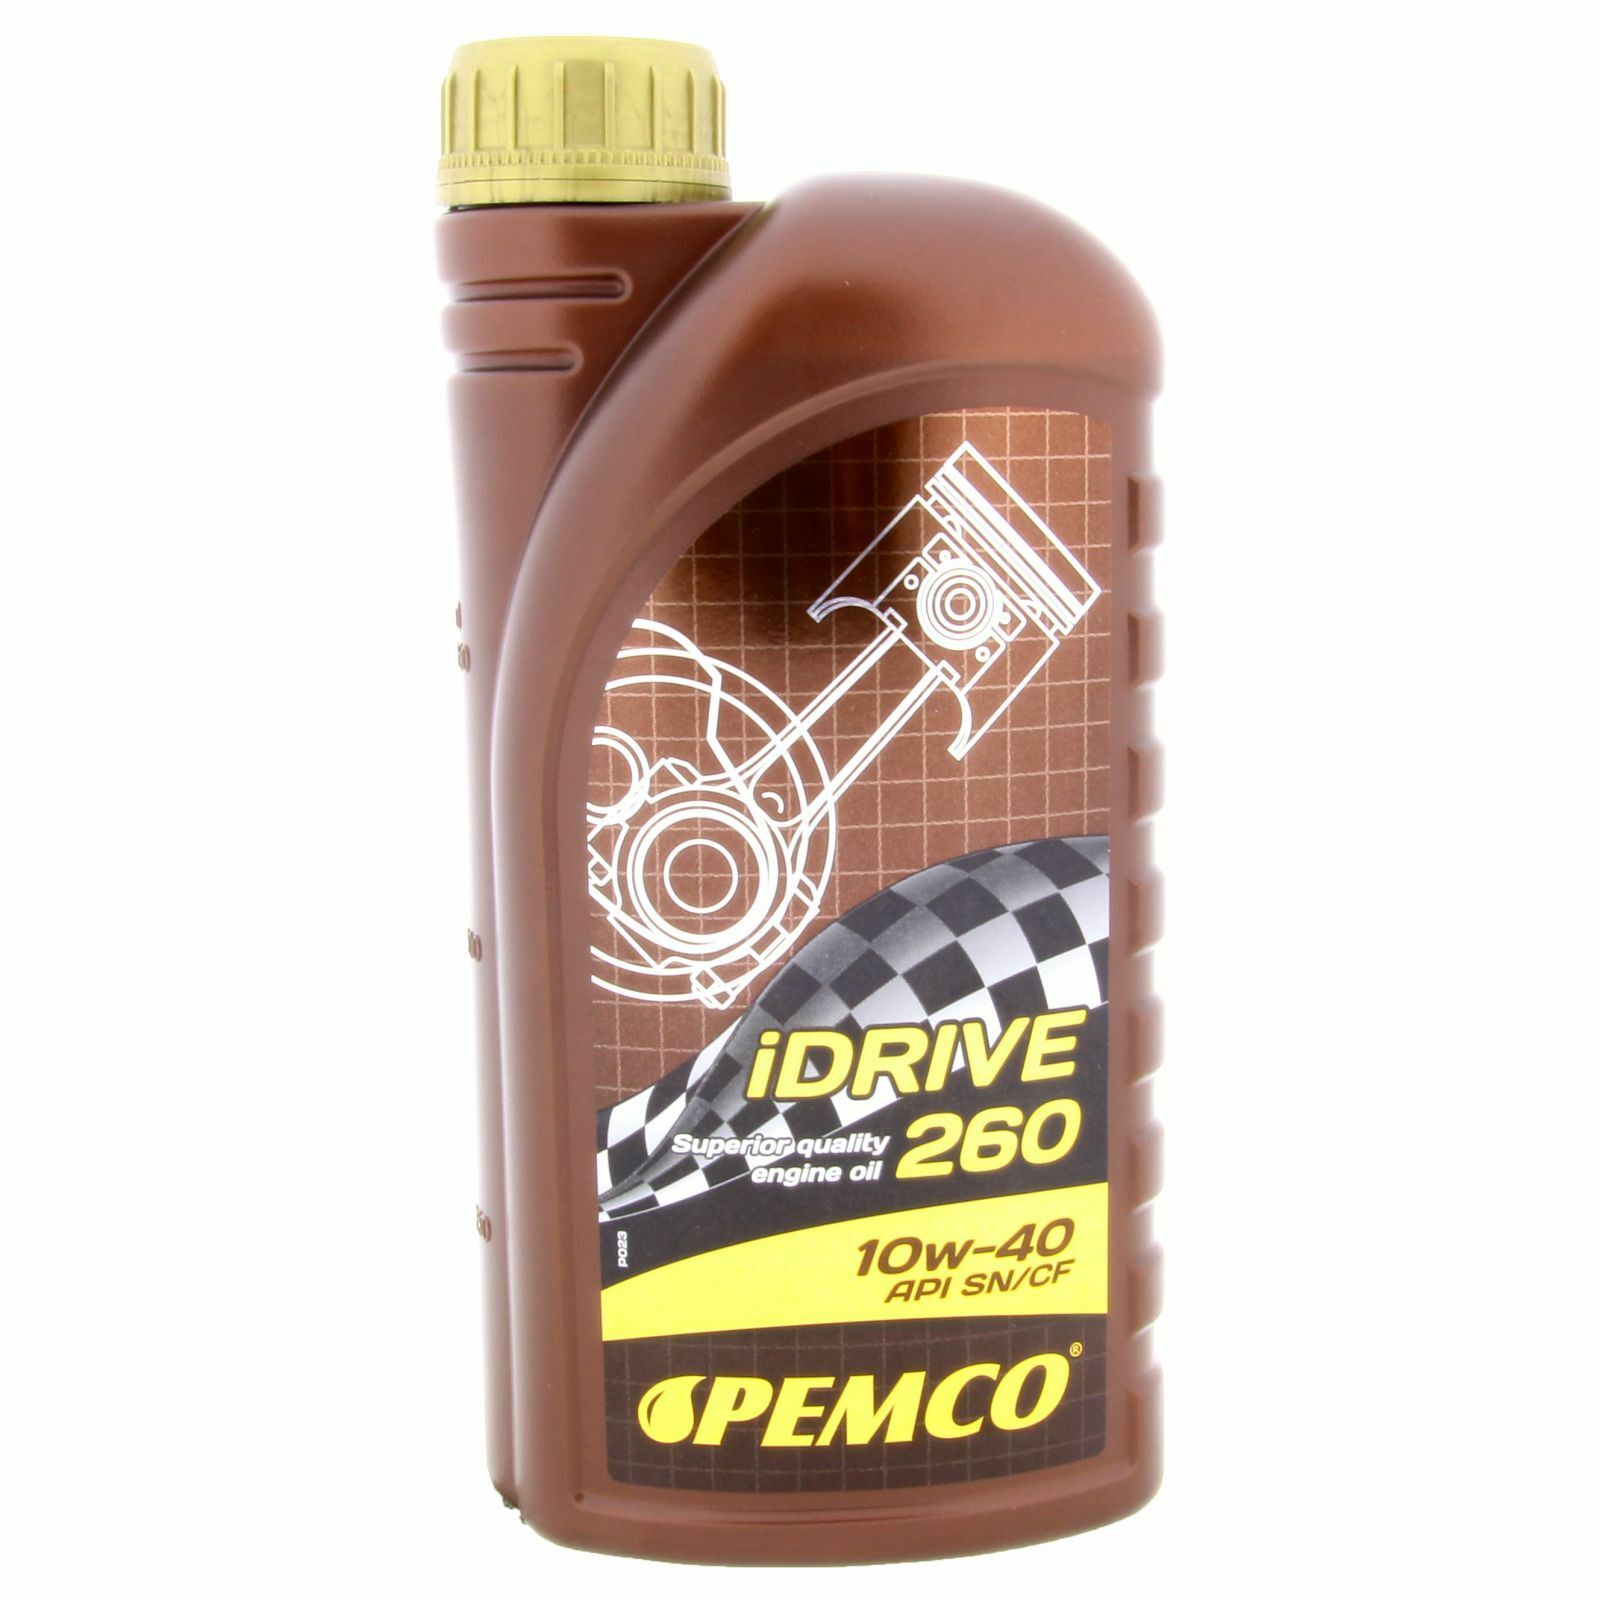 1 Liter PEMCO SAE 10W-40 iDrive 260 Motoröl - Classic Motorenöl Schmierung